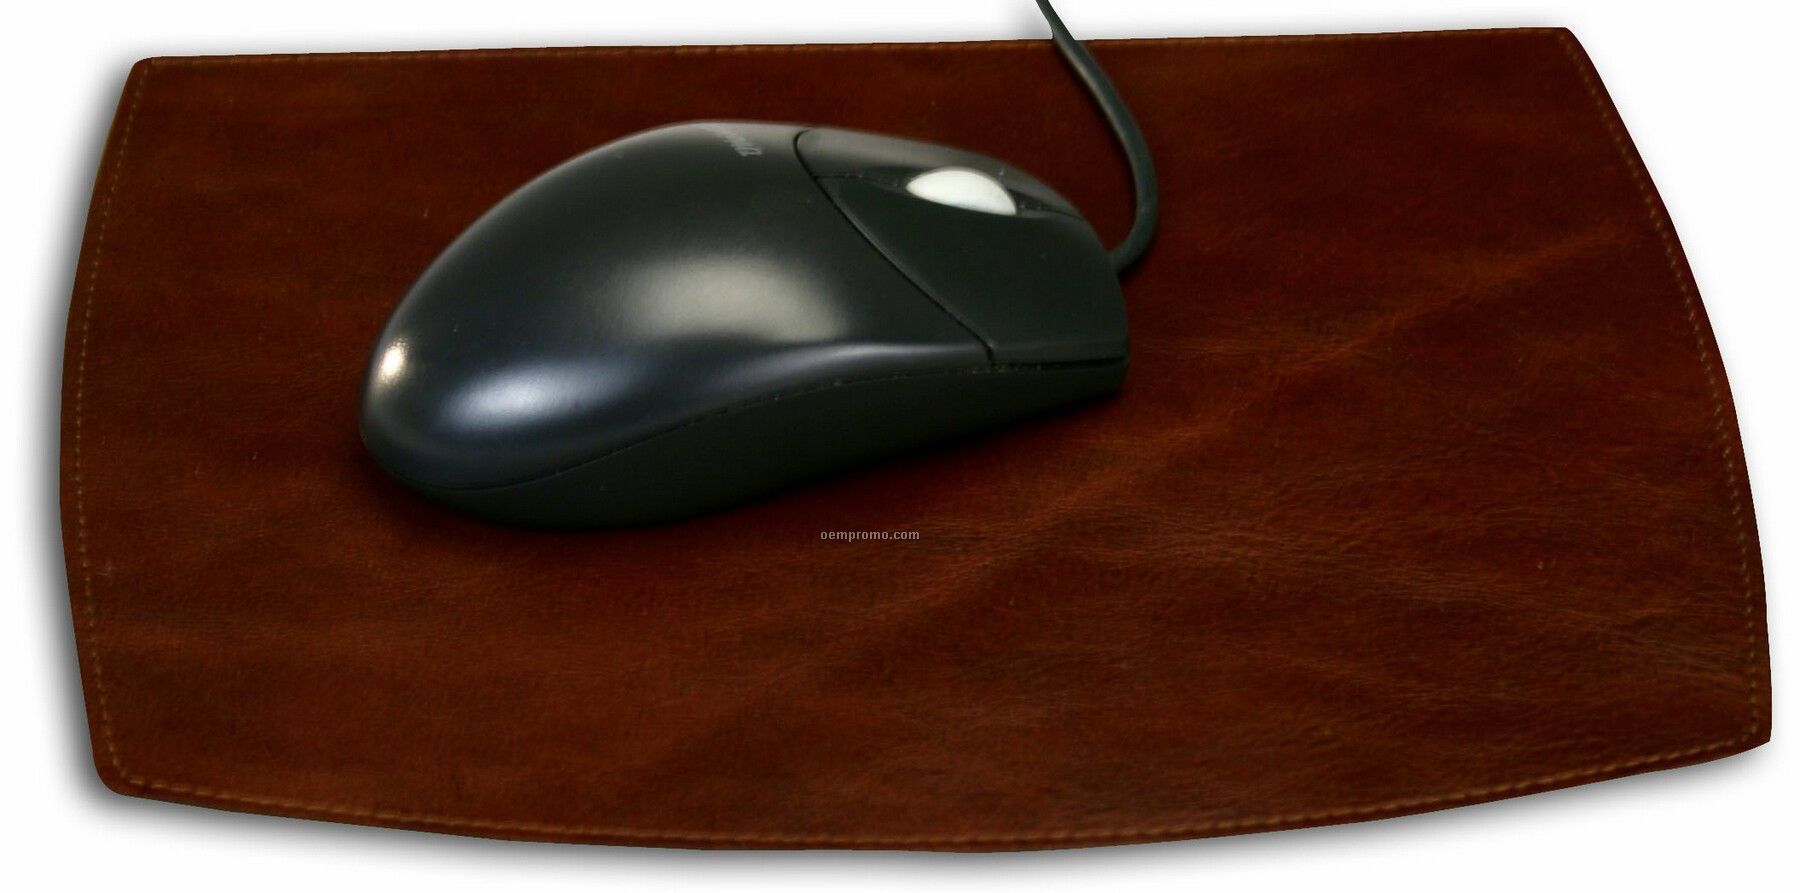 Mocha Classic Leather Mouse Pad